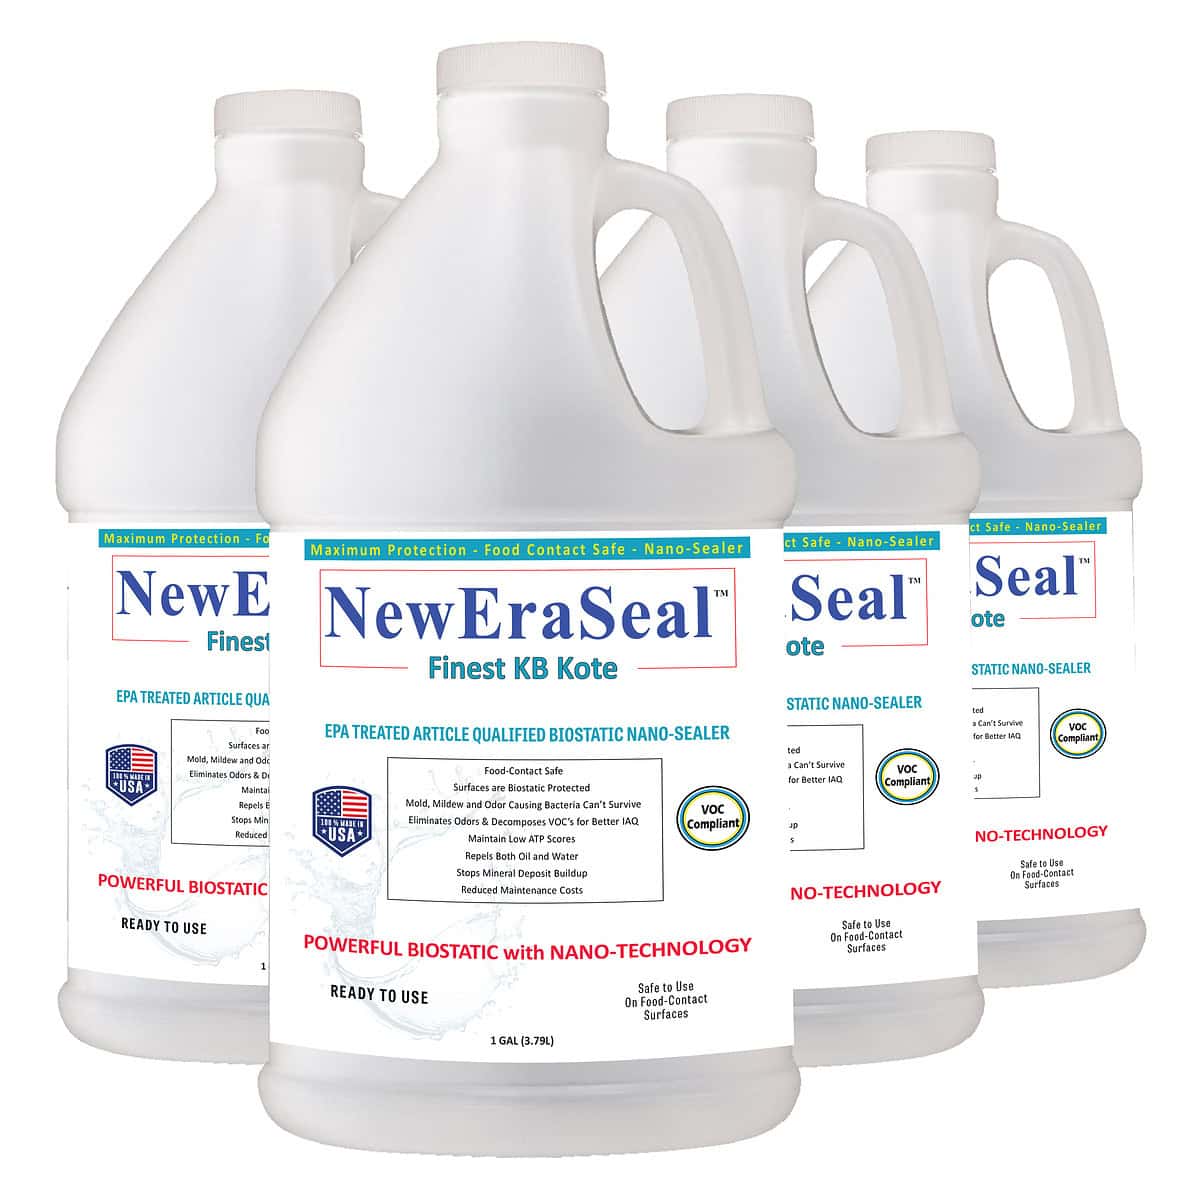 NewEraSeal Finest KB Kote 4-1 gallon bottles